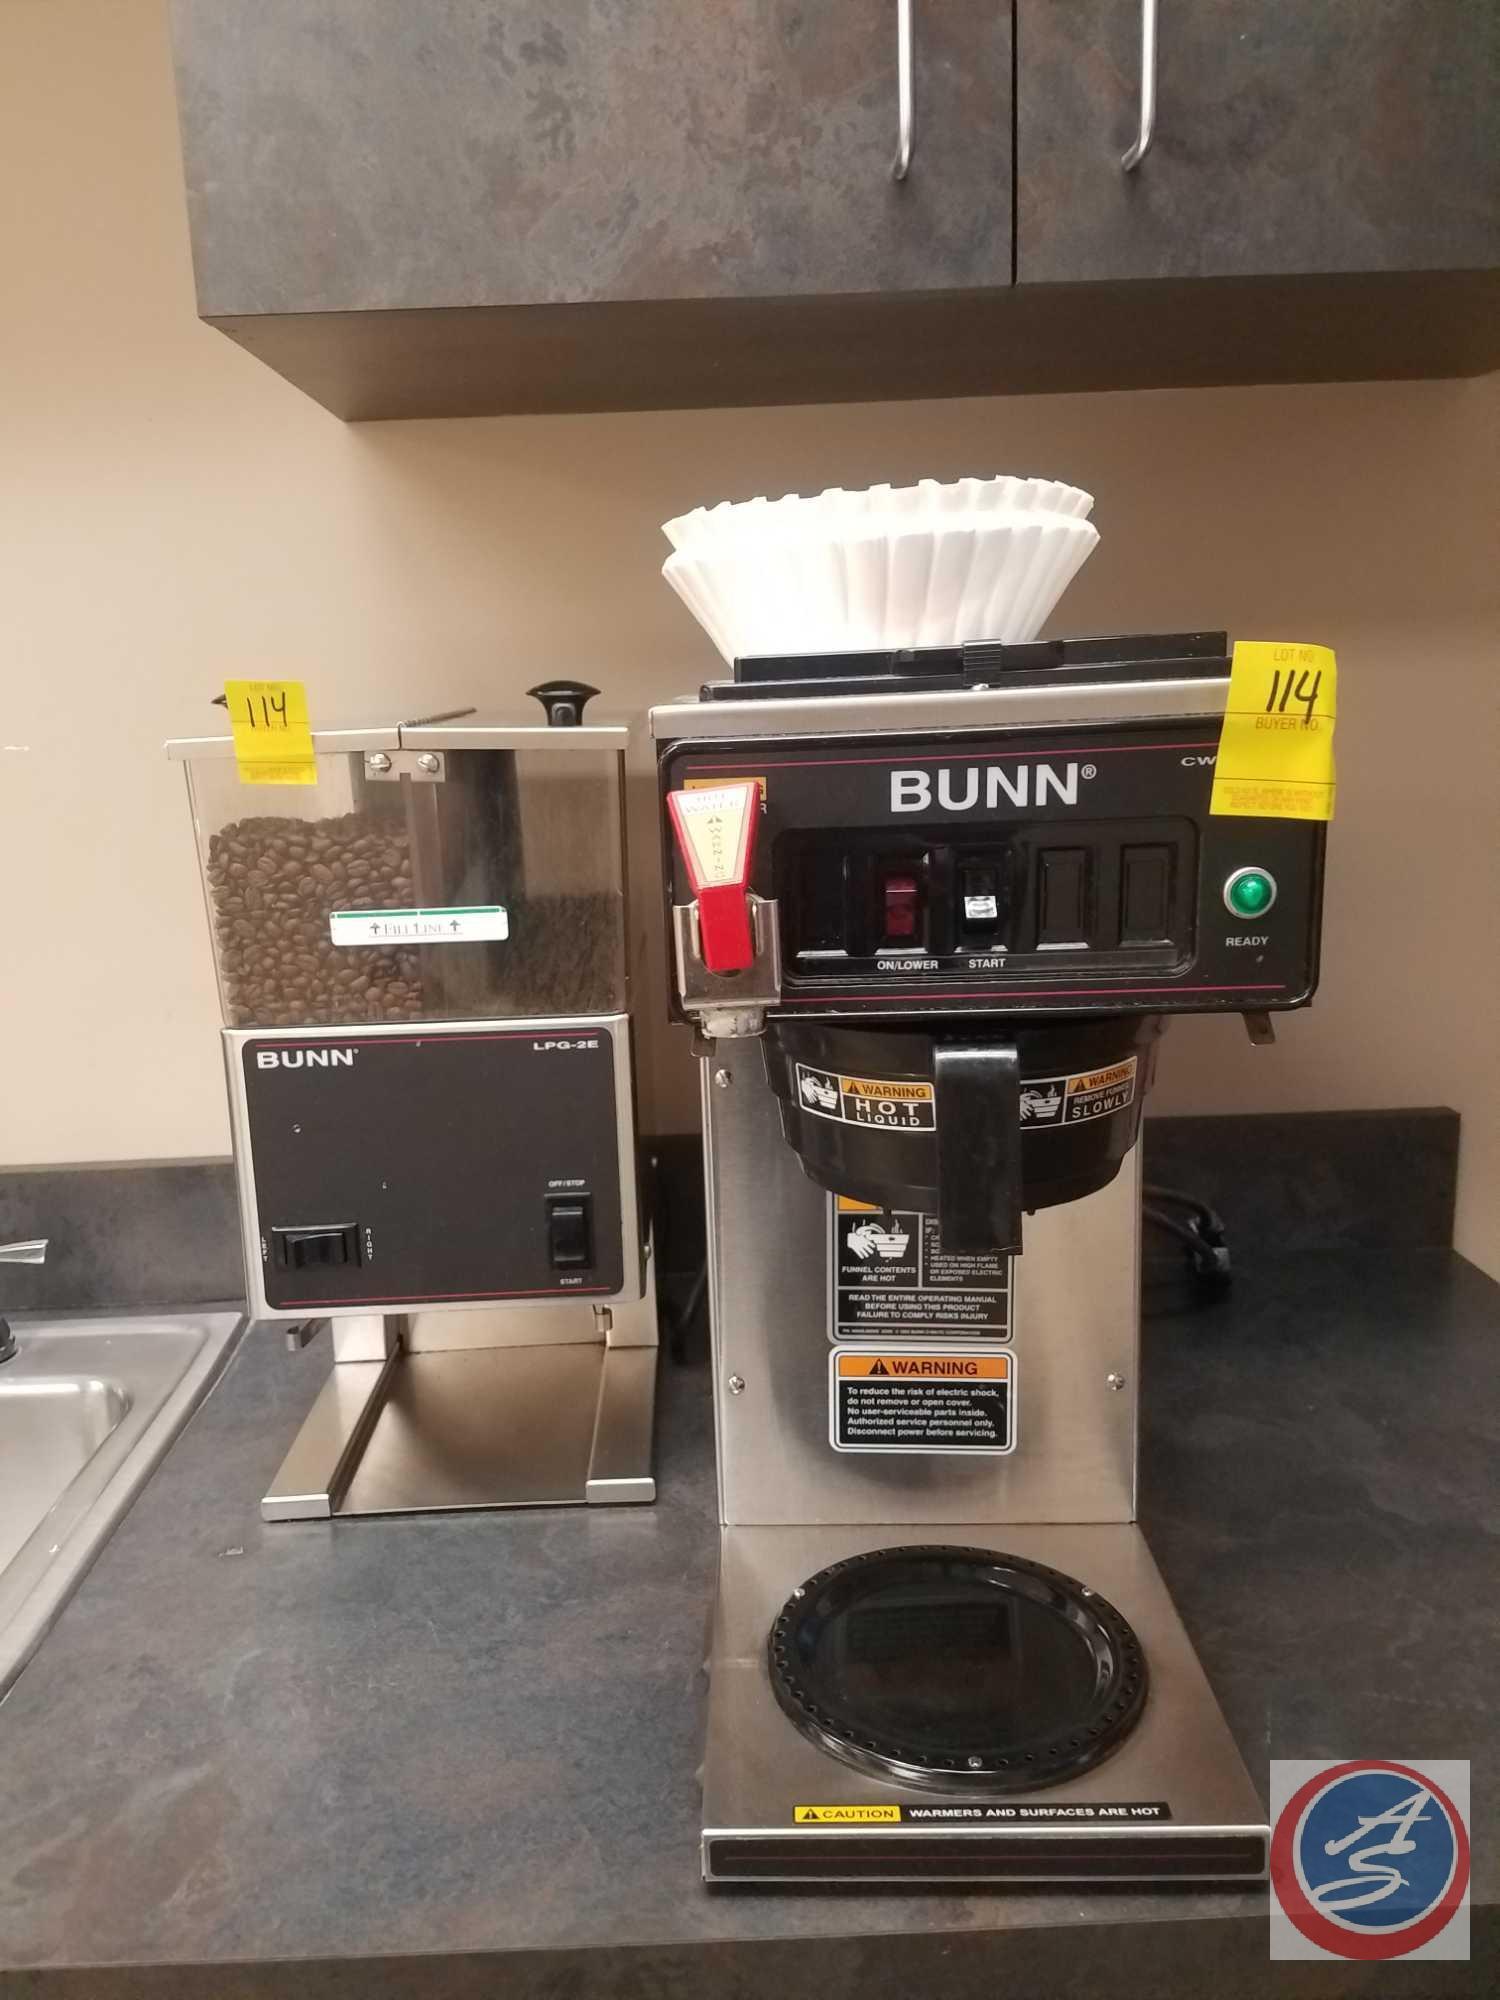 BUNN Coffee Grinder (Model LPG-2E), BUNN Coffee Maker (Model CWTF15,1LPF), Dish Strainer, Hand Soap